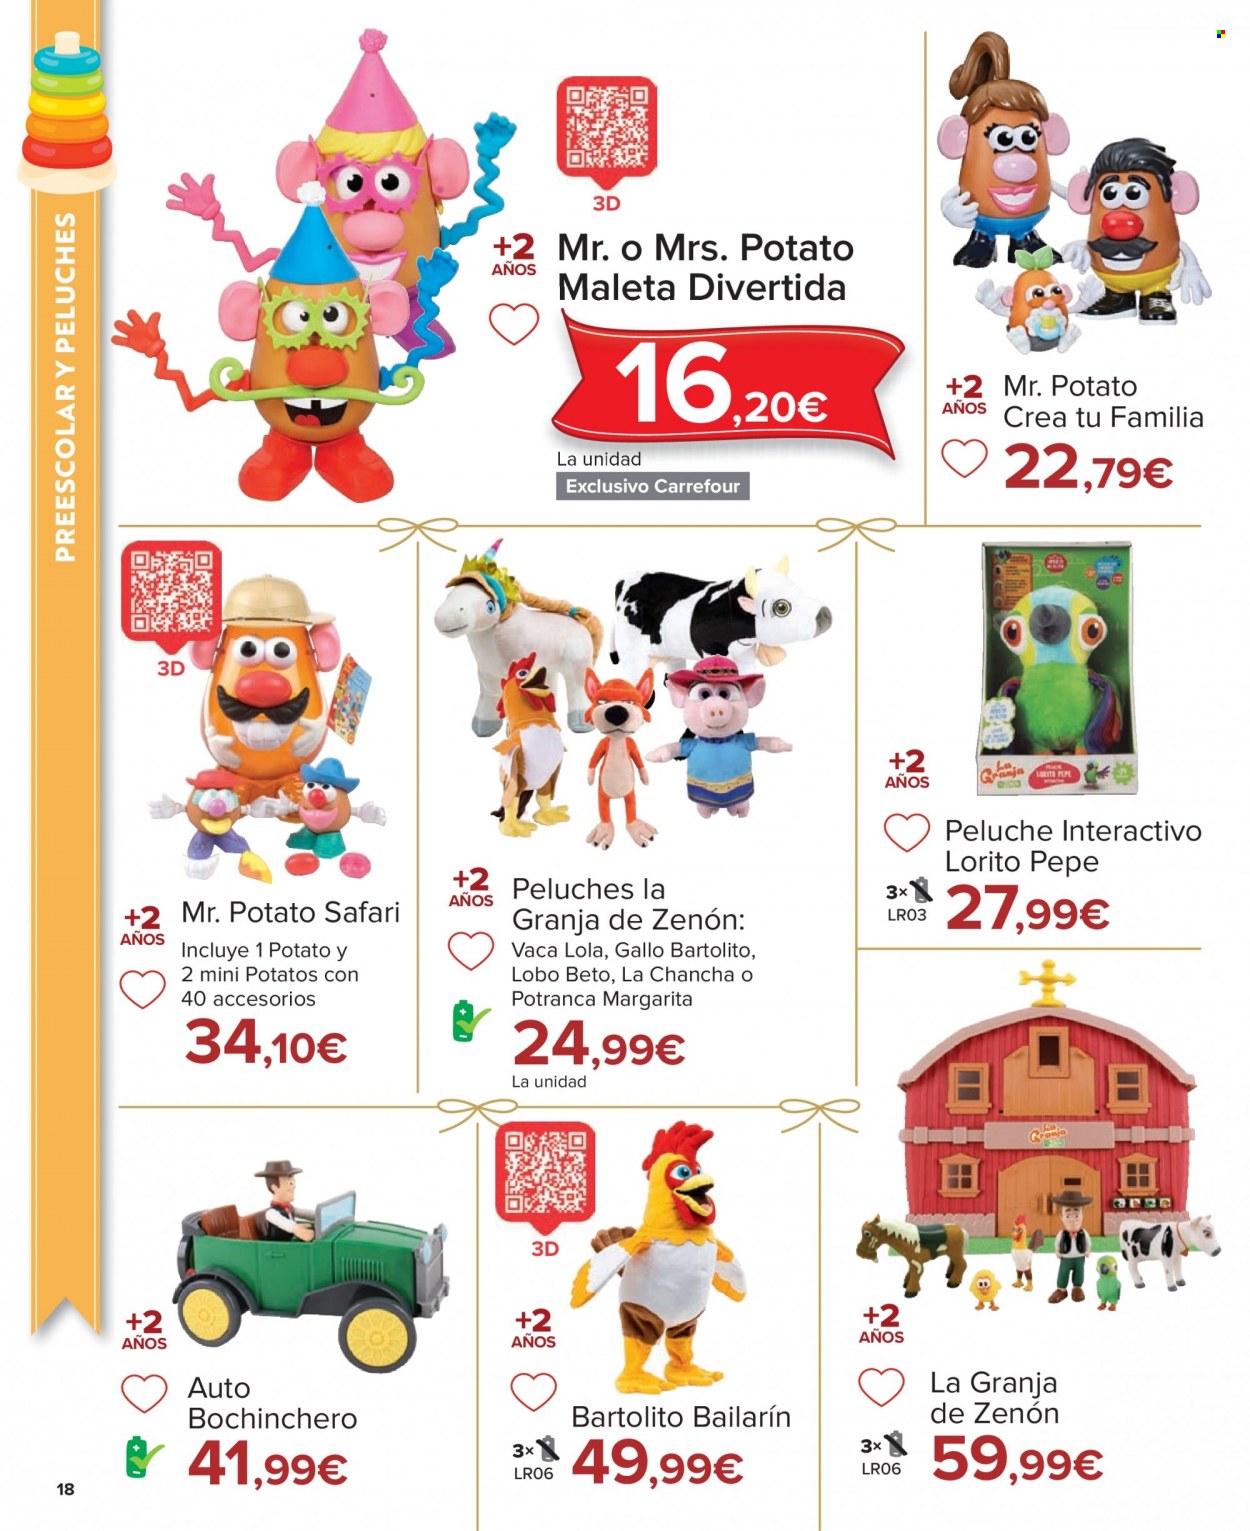 thumbnail - Folleto actual Carrefour - 04/11/22 - 24/12/22 - Ventas - Mr. Potato, juguete, peluche, peluche educativo, coche, figuras de animales. Página 18.